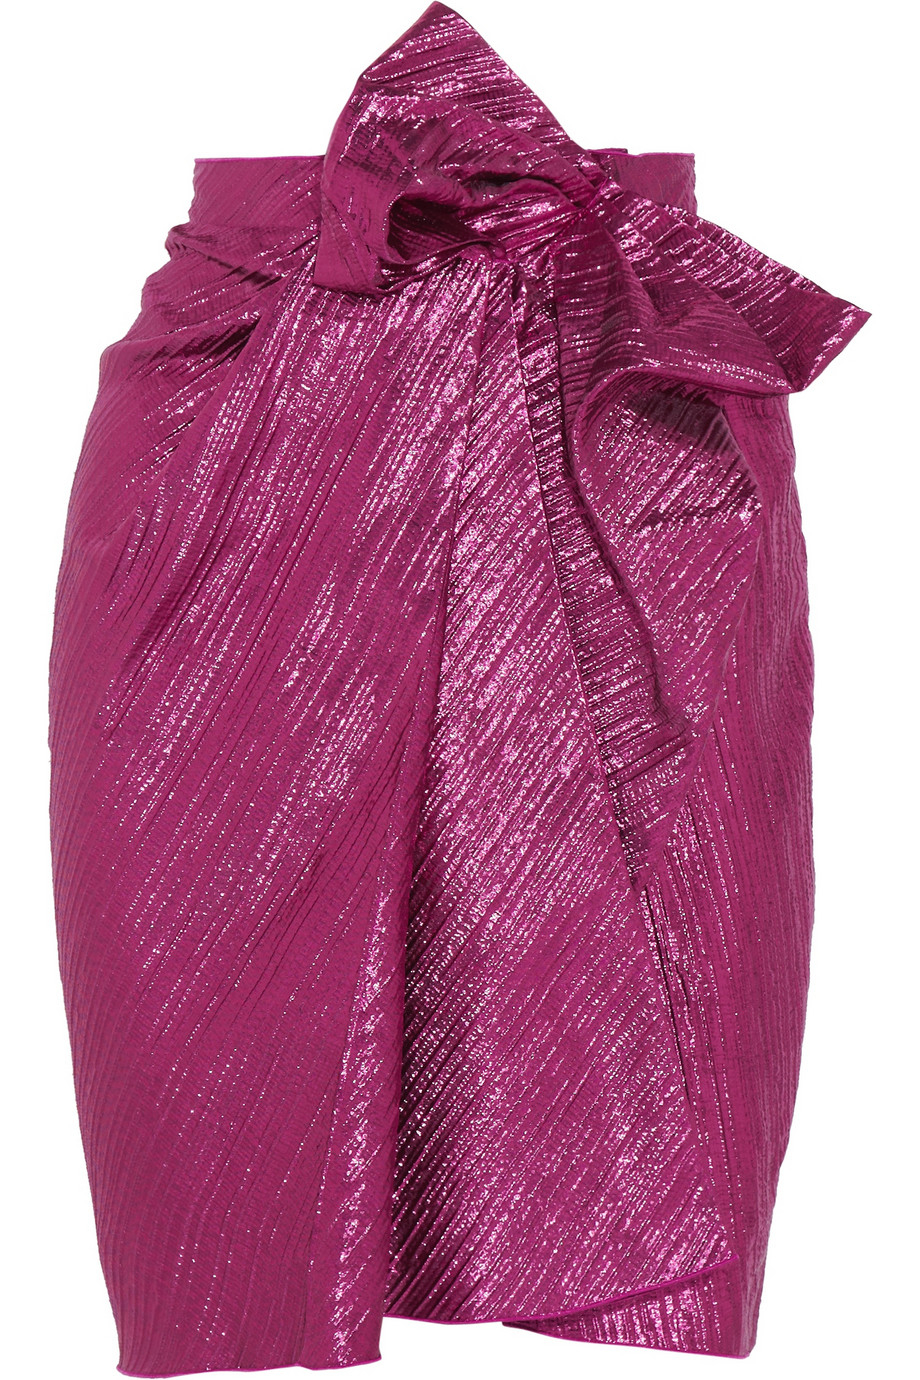 Lanvin Bow-Embellished Lamã© Skirt in Purple | Lyst